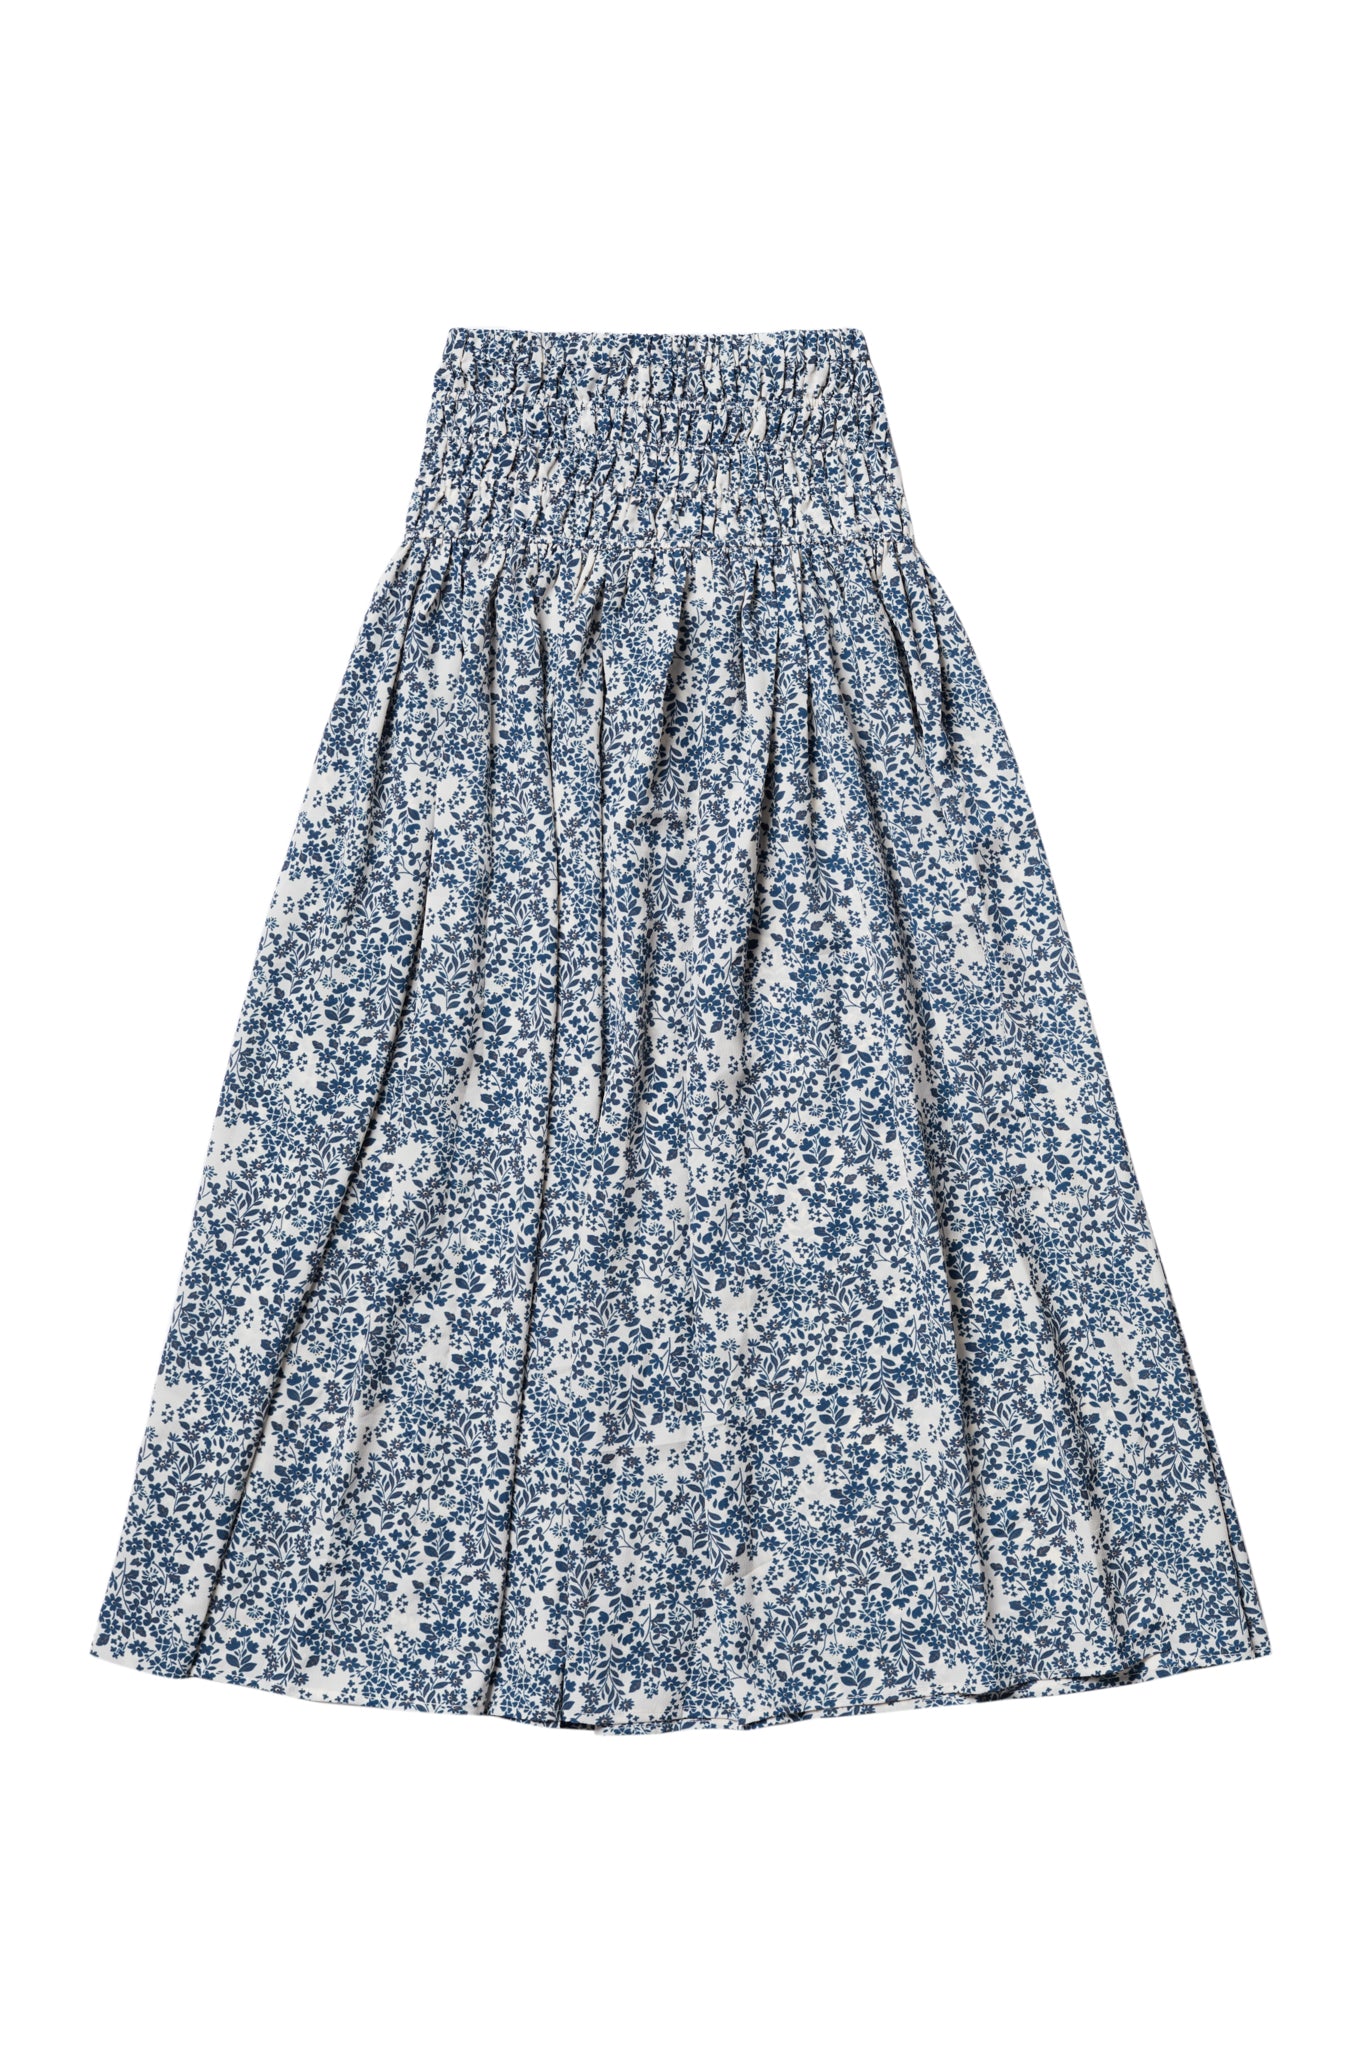 Smocked Maxi Skirt in Blue Flower Print #4071F FINAL SALE